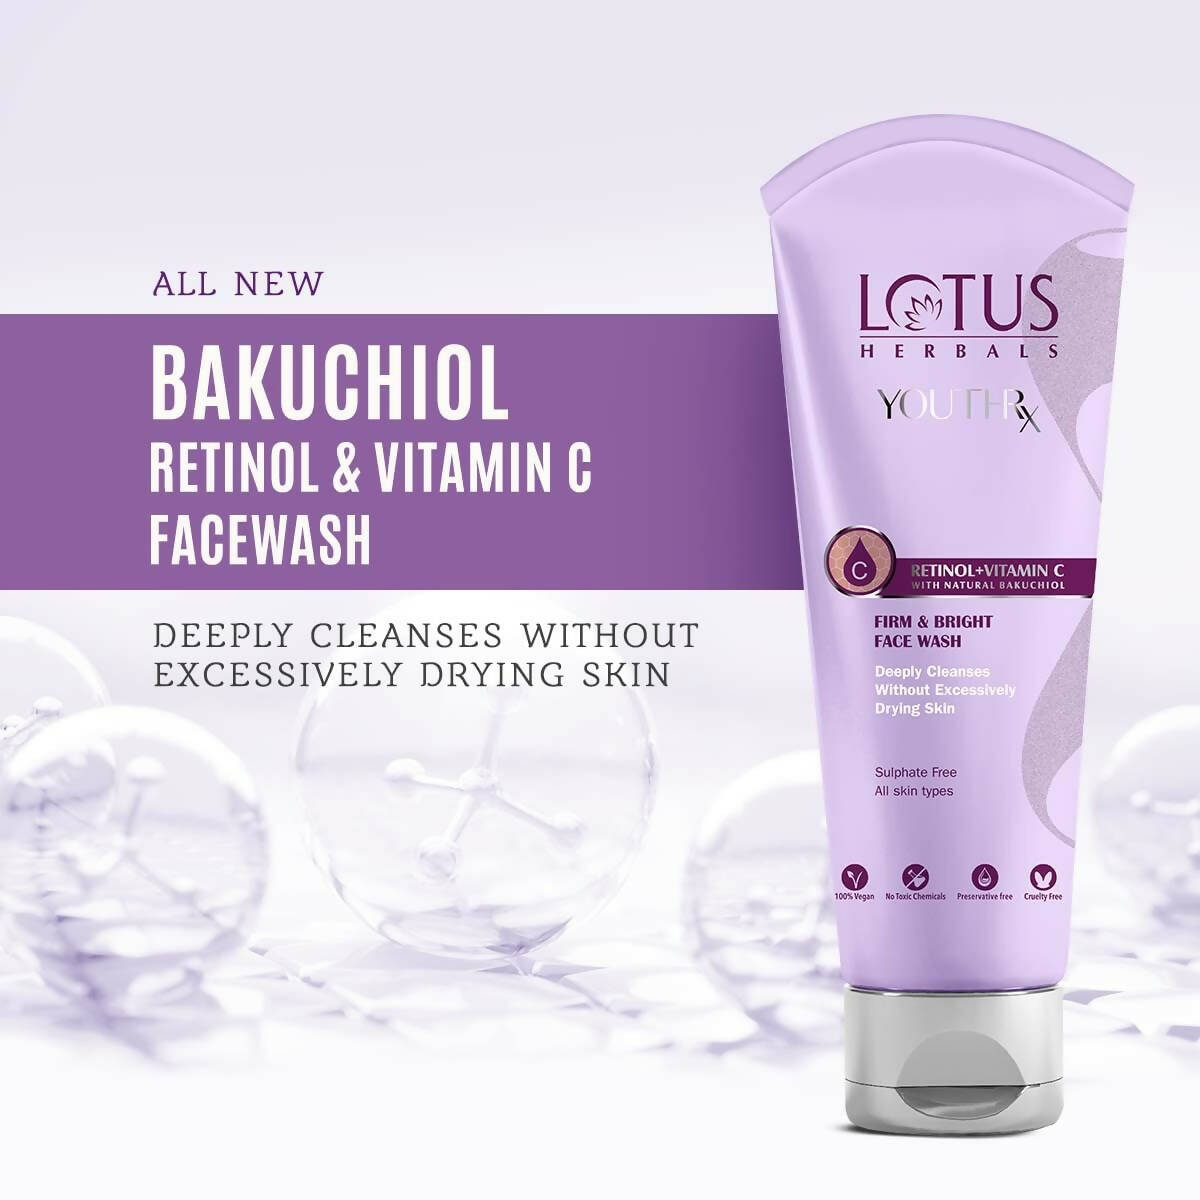 Lotus Herbals YouthRx Firm & Bright Facewash